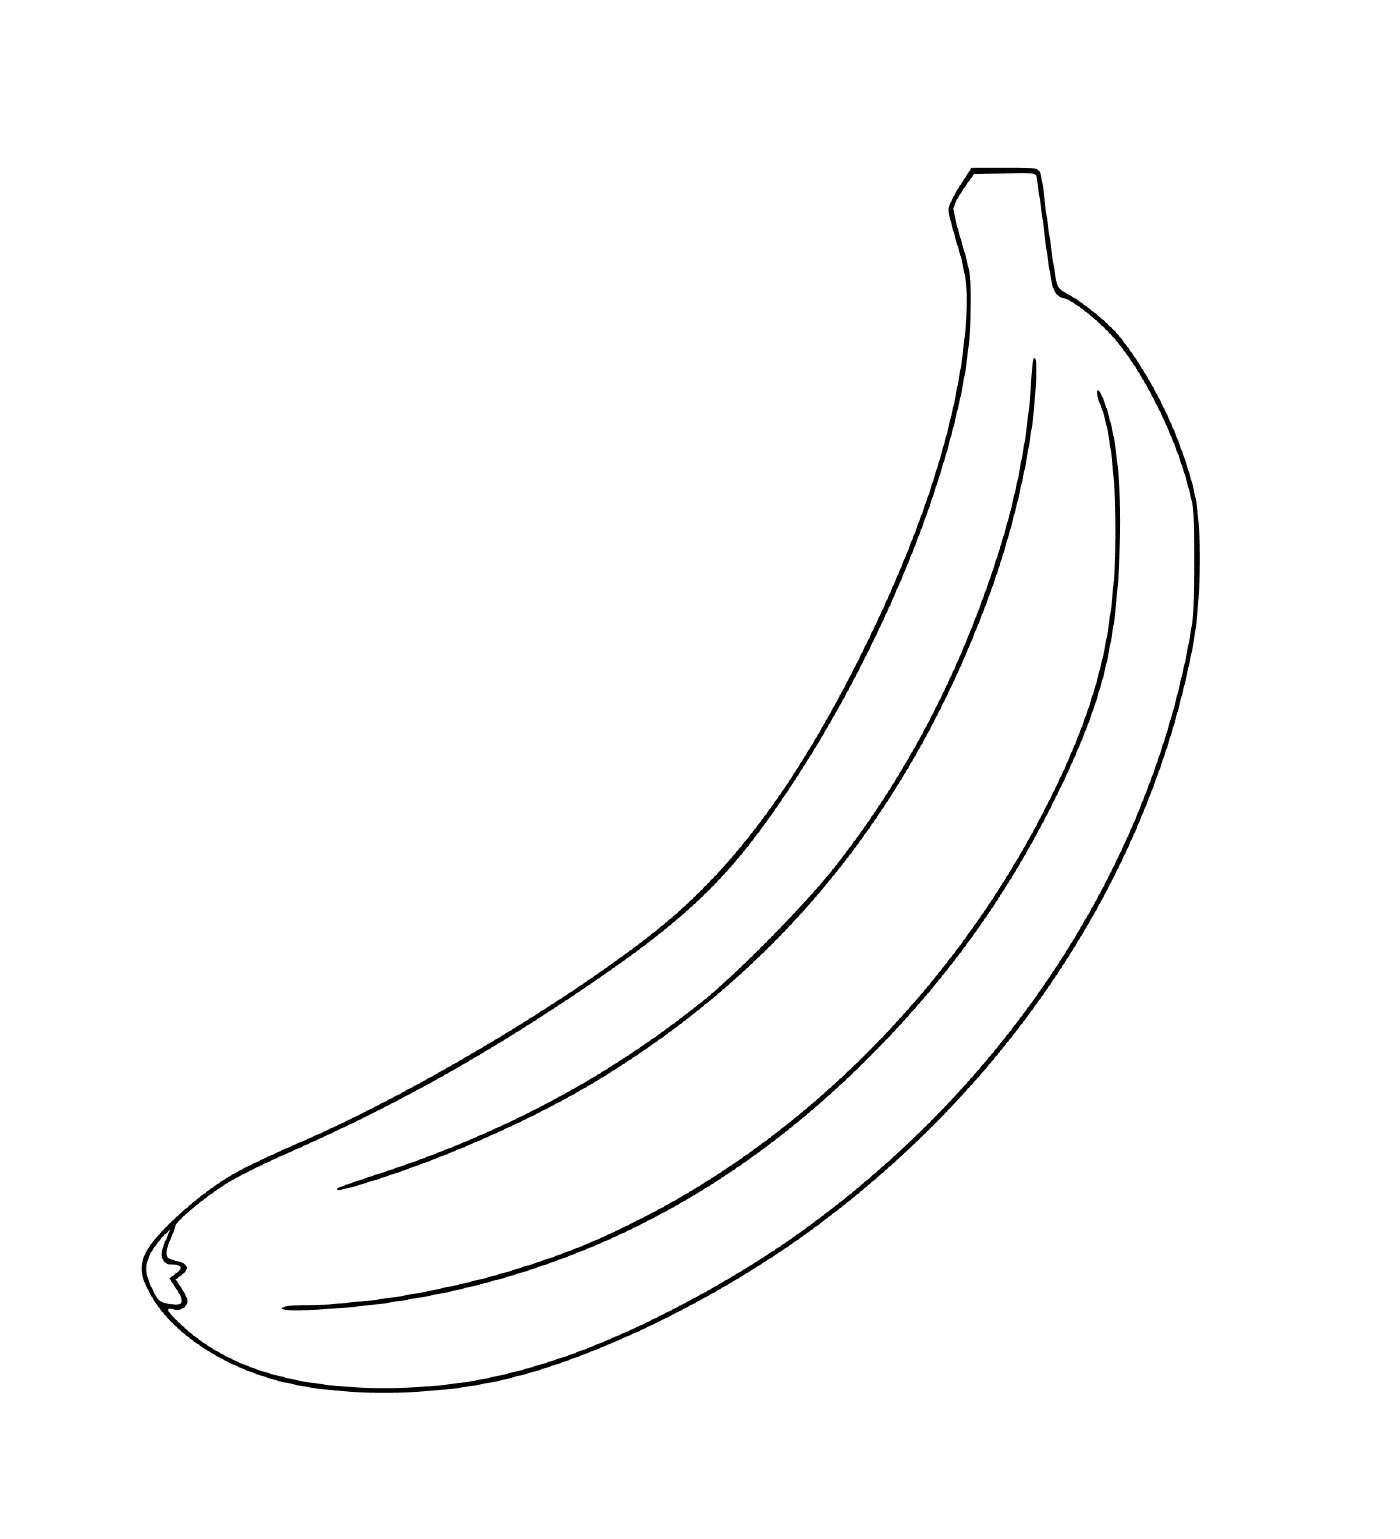  Lecker gelbe Banane 